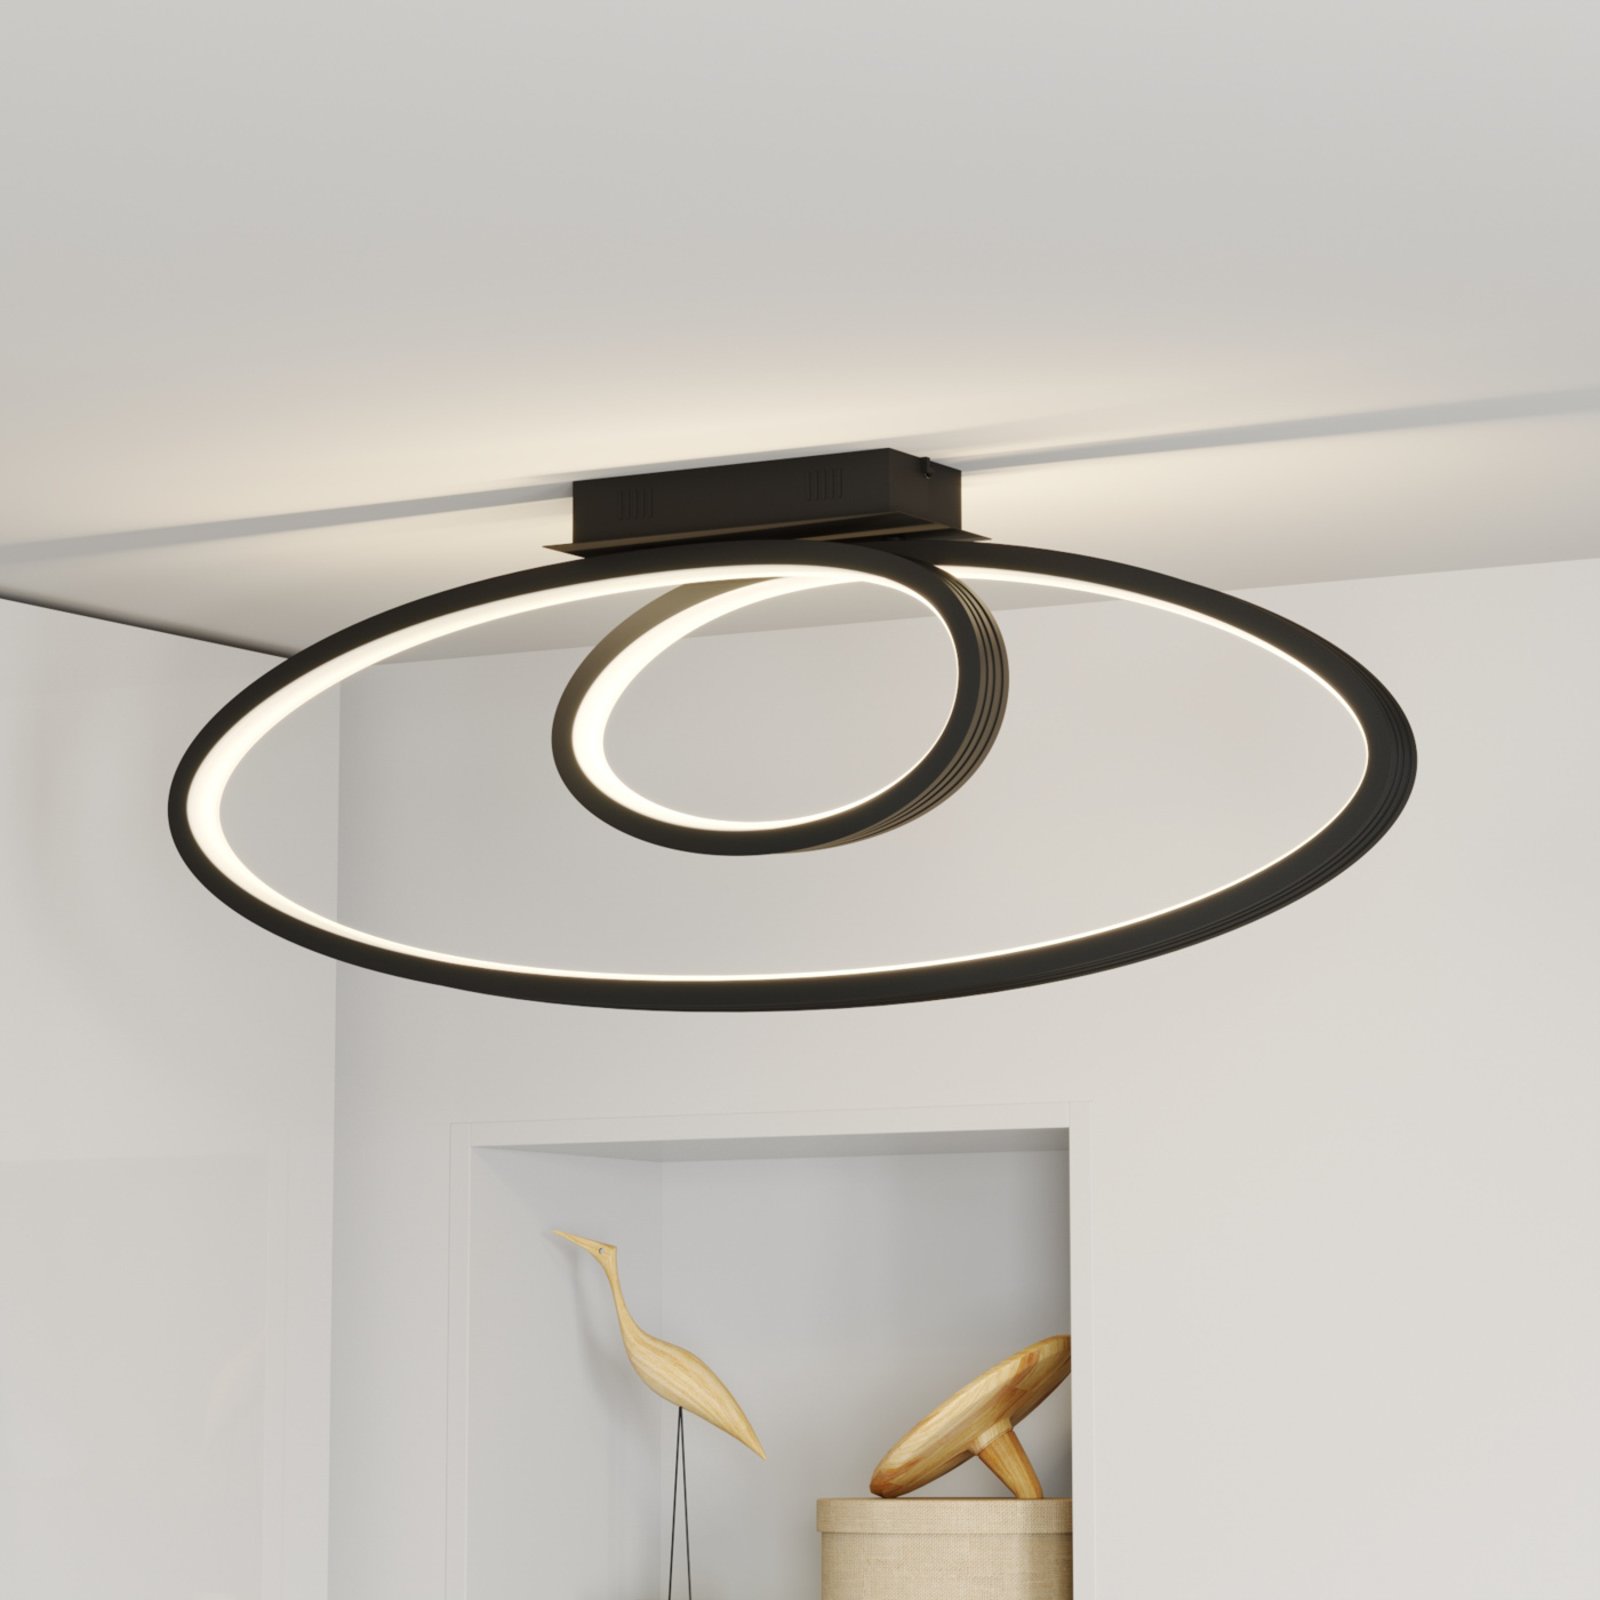 Lucande Bronwyn LED ceiling light, 98 cm